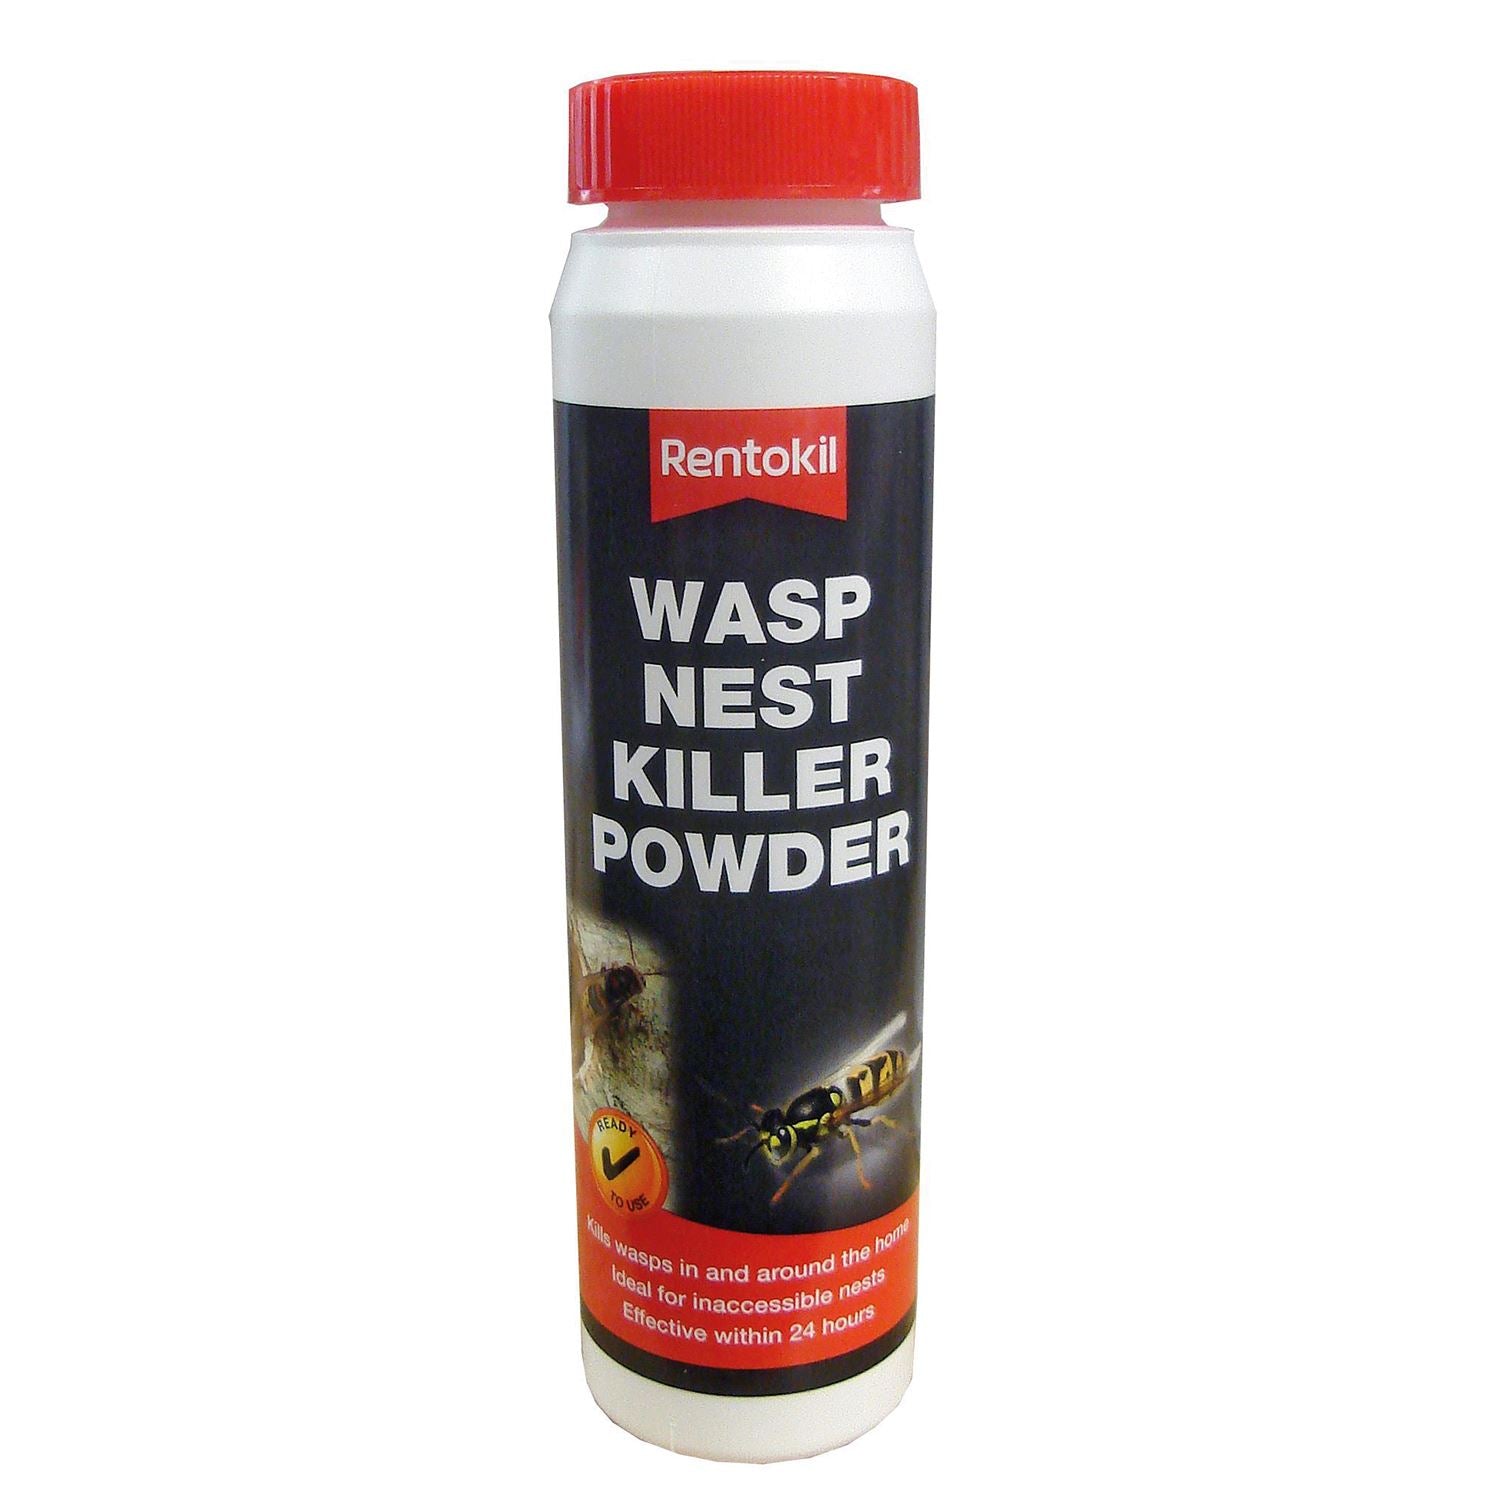 Rentokil Wasp Nest Killer Powder - Just Horse Riders